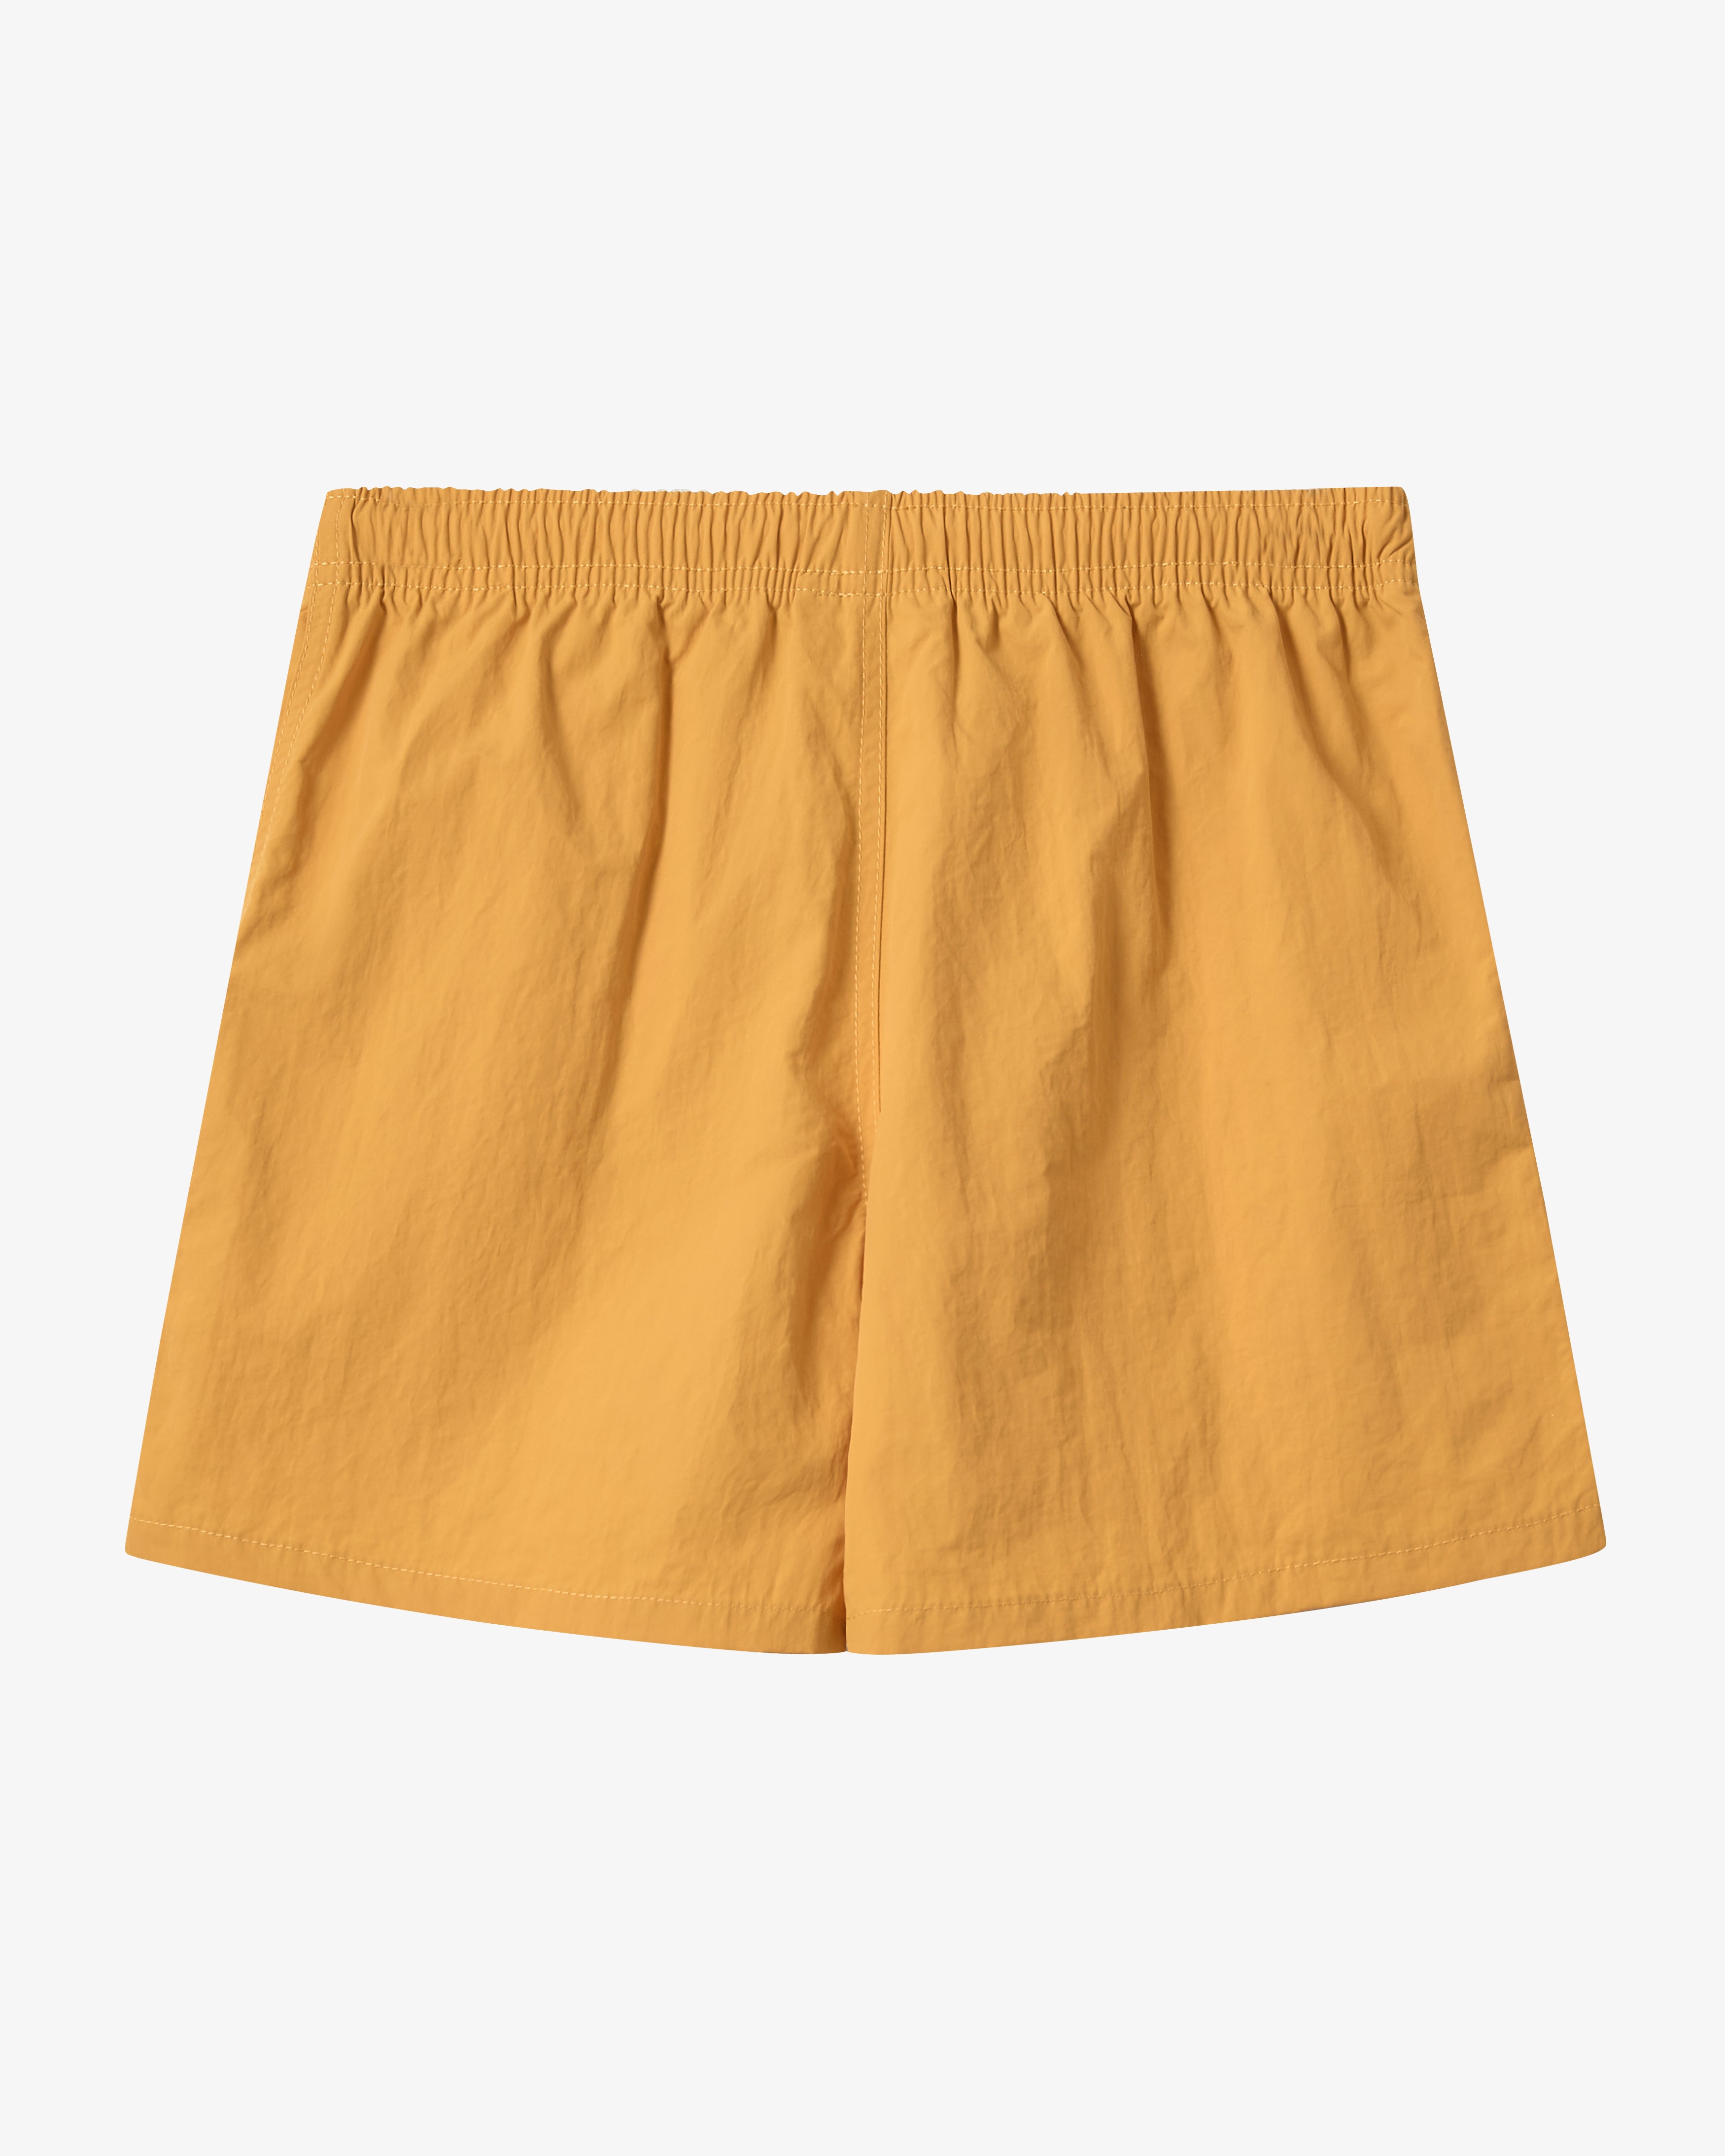 Leisure Woman Swim Shorts - Apricot